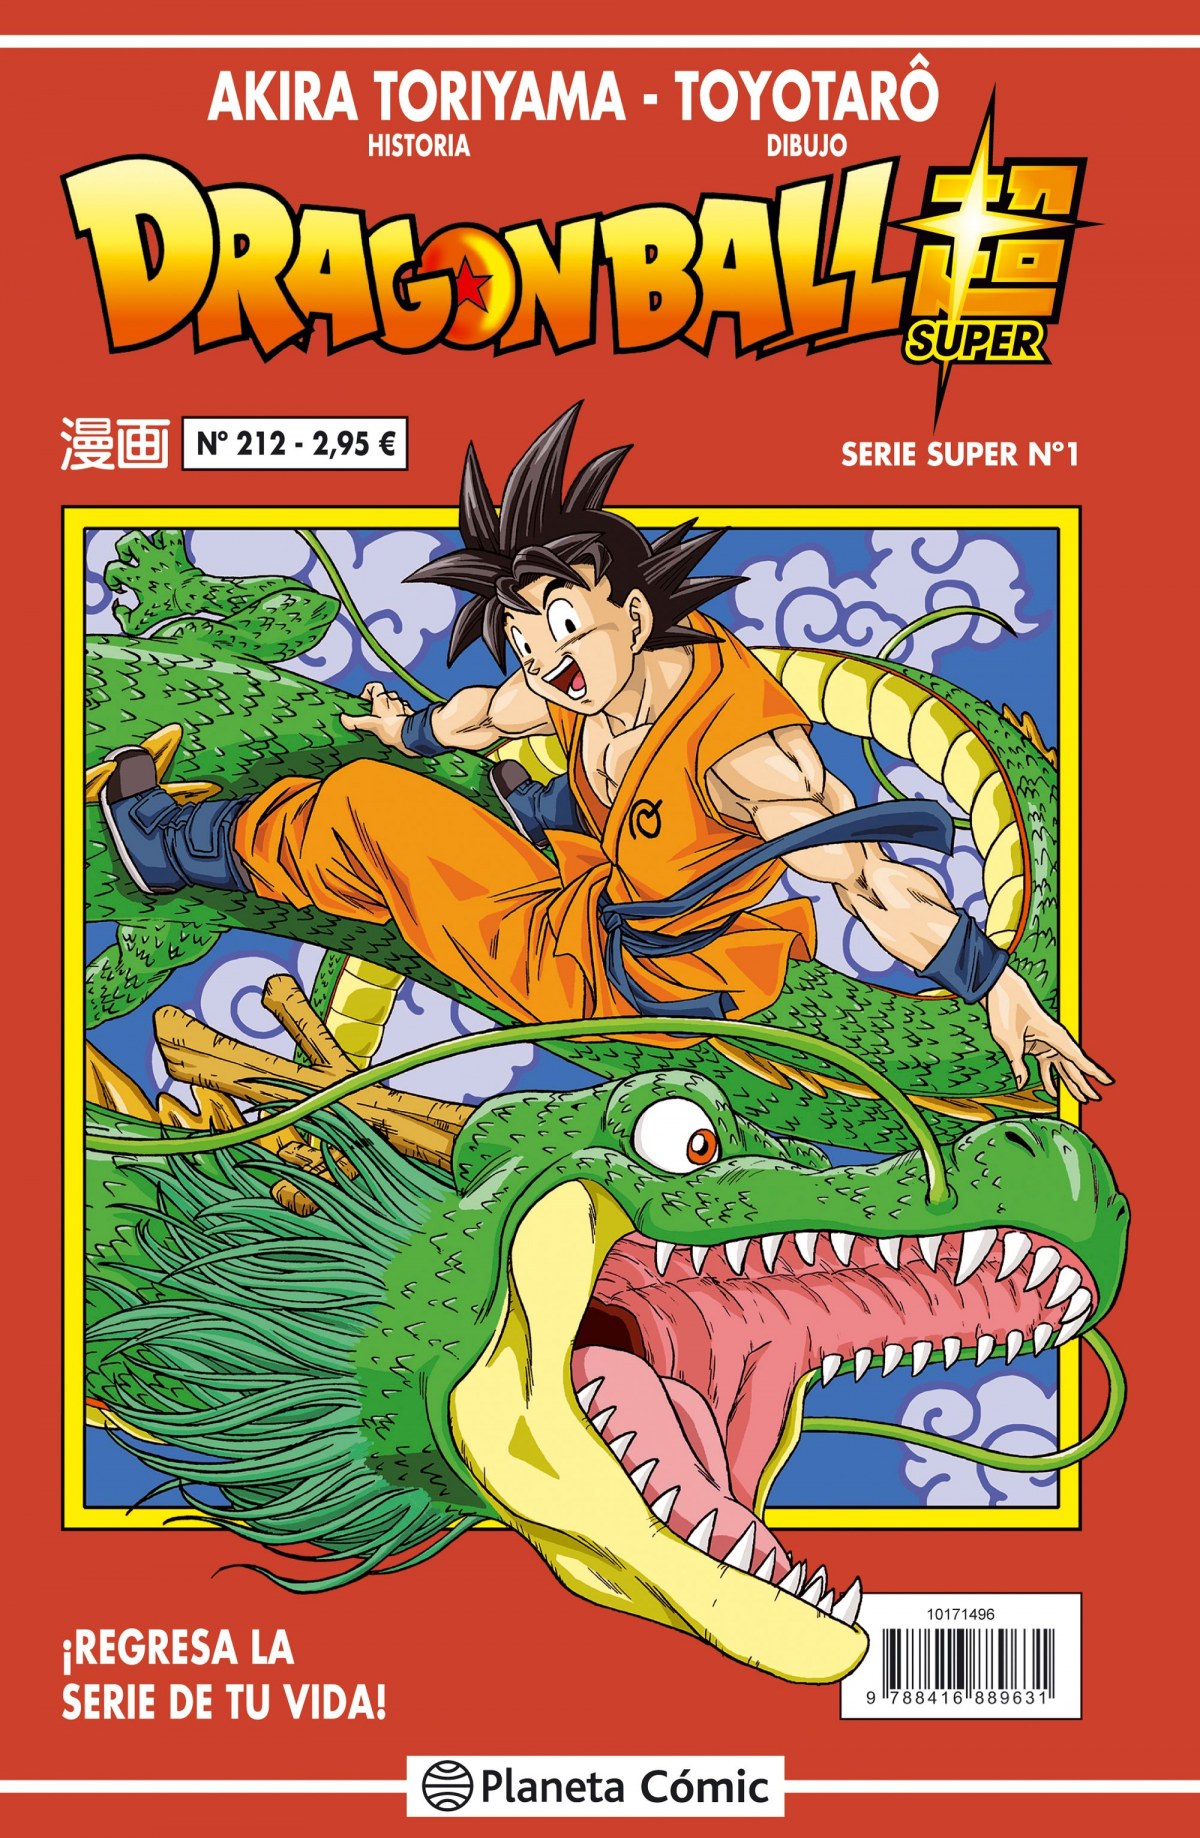 Dragon ball serie roja - Toriyama, Akira